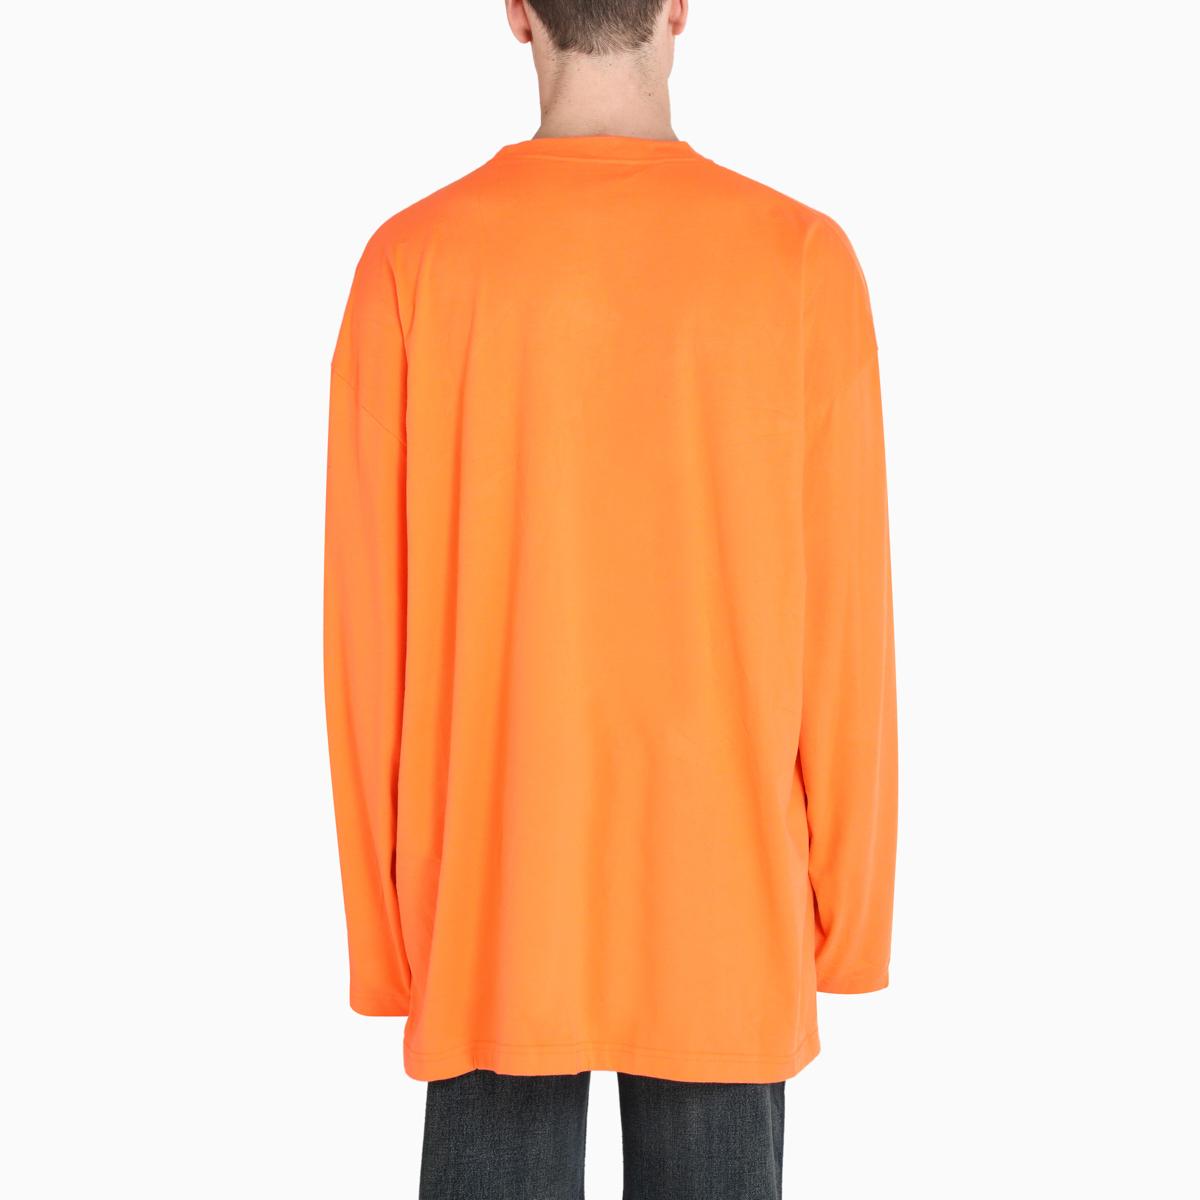 Balenciaga Languages Long Sleeves T-shirt in Orange for Men - Lyst